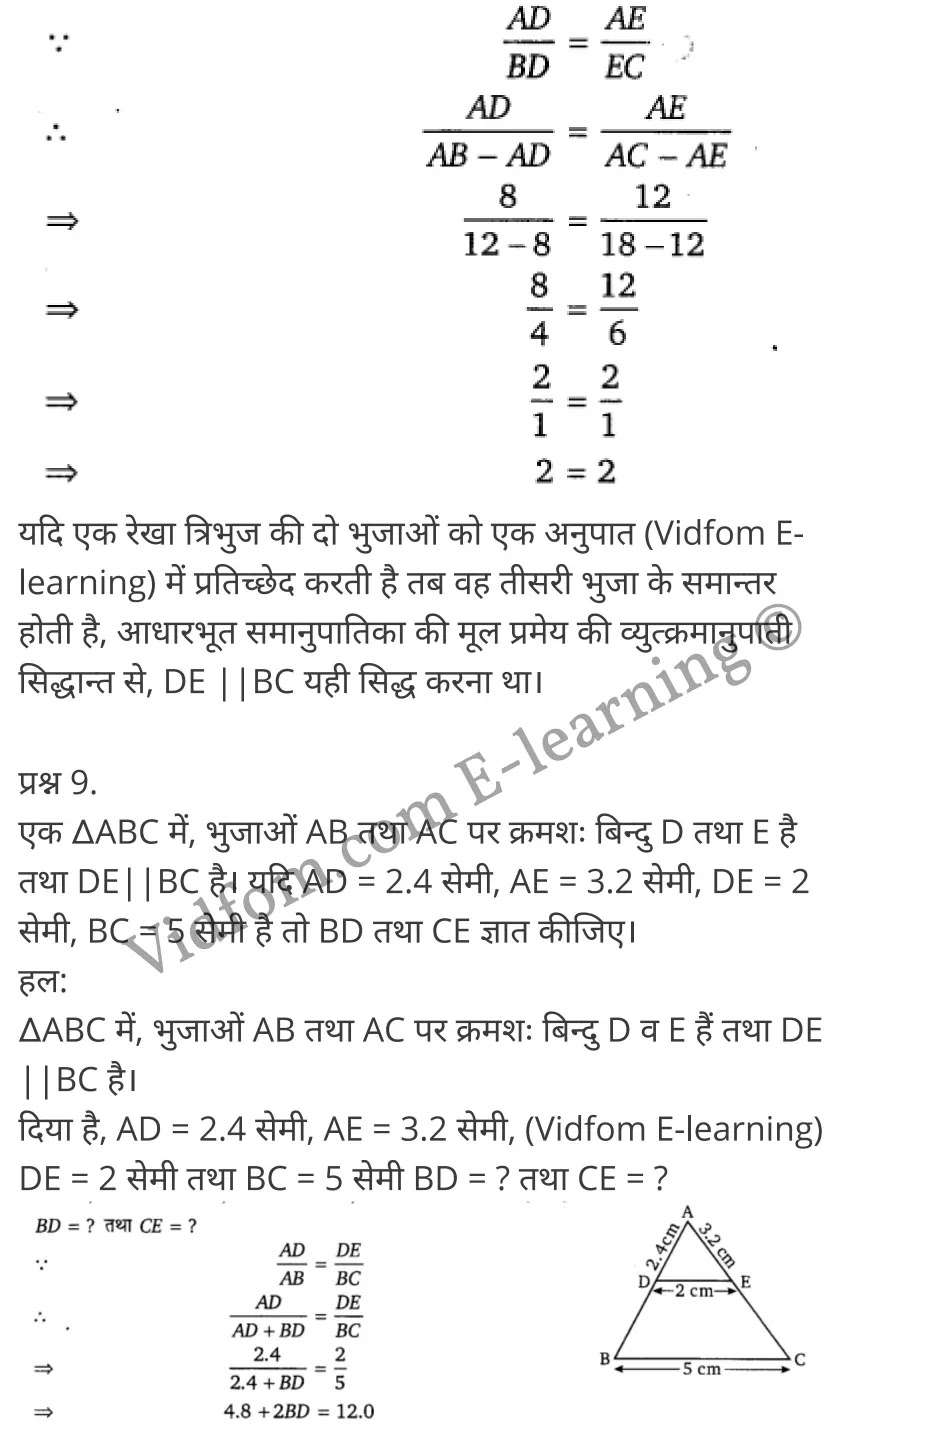 Chapter 7 Triangles Ex 7.1 Chapter 7 Triangles Ex 7.2 Chapter 7 Triangles Ex 7.3 Chapter 7 Triangles Ex 7.4 कक्षा 10 बालाजी गणित  के नोट्स  हिंदी में एनसीईआरटी समाधान,     class 10 Balaji Maths Chapter 7,   class 10 Balaji Maths Chapter 7 ncert solutions in Hindi,   class 10 Balaji Maths Chapter 7 notes in hindi,   class 10 Balaji Maths Chapter 7 question answer,   class 10 Balaji Maths Chapter 7 notes,   class 10 Balaji Maths Chapter 7 class 10 Balaji Maths Chapter 7 in  hindi,    class 10 Balaji Maths Chapter 7 important questions in  hindi,   class 10 Balaji Maths Chapter 7 notes in hindi,    class 10 Balaji Maths Chapter 7 test,   class 10 Balaji Maths Chapter 7 pdf,   class 10 Balaji Maths Chapter 7 notes pdf,   class 10 Balaji Maths Chapter 7 exercise solutions,   class 10 Balaji Maths Chapter 7 notes study rankers,   class 10 Balaji Maths Chapter 7 notes,    class 10 Balaji Maths Chapter 7  class 10  notes pdf,   class 10 Balaji Maths Chapter 7 class 10  notes  ncert,   class 10 Balaji Maths Chapter 7 class 10 pdf,   class 10 Balaji Maths Chapter 7  book,   class 10 Balaji Maths Chapter 7 quiz class 10  ,    10  th class 10 Balaji Maths Chapter 7  book up board,   up board 10  th class 10 Balaji Maths Chapter 7 notes,  class 10 Balaji Maths,   class 10 Balaji Maths ncert solutions in Hindi,   class 10 Balaji Maths notes in hindi,   class 10 Balaji Maths question answer,   class 10 Balaji Maths notes,  class 10 Balaji Maths class 10 Balaji Maths Chapter 7 in  hindi,    class 10 Balaji Maths important questions in  hindi,   class 10 Balaji Maths notes in hindi,    class 10 Balaji Maths test,  class 10 Balaji Maths class 10 Balaji Maths Chapter 7 pdf,   class 10 Balaji Maths notes pdf,   class 10 Balaji Maths exercise solutions,   class 10 Balaji Maths,  class 10 Balaji Maths notes study rankers,   class 10 Balaji Maths notes,  class 10 Balaji Maths notes,   class 10 Balaji Maths  class 10  notes pdf,   class 10 Balaji Maths class 10  notes  ncert,   class 10 Balaji Maths class 10 pdf,   class 10 Balaji Maths  book,  class 10 Balaji Maths quiz class 10  ,  10  th class 10 Balaji Maths    book up board,    up board 10  th class 10 Balaji Maths notes,      कक्षा 10 बालाजी गणित अध्याय 7 ,  कक्षा 10 बालाजी गणित, कक्षा 10 बालाजी गणित अध्याय 7  के नोट्स हिंदी में,  कक्षा 10 का हिंदी अध्याय 7 का प्रश्न उत्तर,  कक्षा 10 बालाजी गणित अध्याय 7  के नोट्स,  10 कक्षा बालाजी गणित  हिंदी में, कक्षा 10 बालाजी गणित अध्याय 7  हिंदी में,  कक्षा 10 बालाजी गणित अध्याय 7  महत्वपूर्ण प्रश्न हिंदी में, कक्षा 10   हिंदी के नोट्स  हिंदी में, बालाजी गणित हिंदी में  कक्षा 10 नोट्स pdf,    बालाजी गणित हिंदी में  कक्षा 10 नोट्स 2021 ncert,   बालाजी गणित हिंदी  कक्षा 10 pdf,   बालाजी गणित हिंदी में  पुस्तक,   बालाजी गणित हिंदी में की बुक,   बालाजी गणित हिंदी में  प्रश्नोत्तरी class 10 ,  बिहार बोर्ड 10  पुस्तक वीं हिंदी नोट्स,    बालाजी गणित कक्षा 10 नोट्स 2021 ncert,   बालाजी गणित  कक्षा 10 pdf,   बालाजी गणित  पुस्तक,   बालाजी गणित  प्रश्नोत्तरी class 10, कक्षा 10 बालाजी गणित,  कक्षा 10 बालाजी गणित  के नोट्स हिंदी में,  कक्षा 10 का हिंदी का प्रश्न उत्तर,  कक्षा 10 बालाजी गणित  के नोट्स,  10 कक्षा हिंदी 2021  हिंदी में, कक्षा 10 बालाजी गणित  हिंदी में,  कक्षा 10 बालाजी गणित  महत्वपूर्ण प्रश्न हिंदी में, कक्षा 10 बालाजी गणित  नोट्स  हिंदी में,